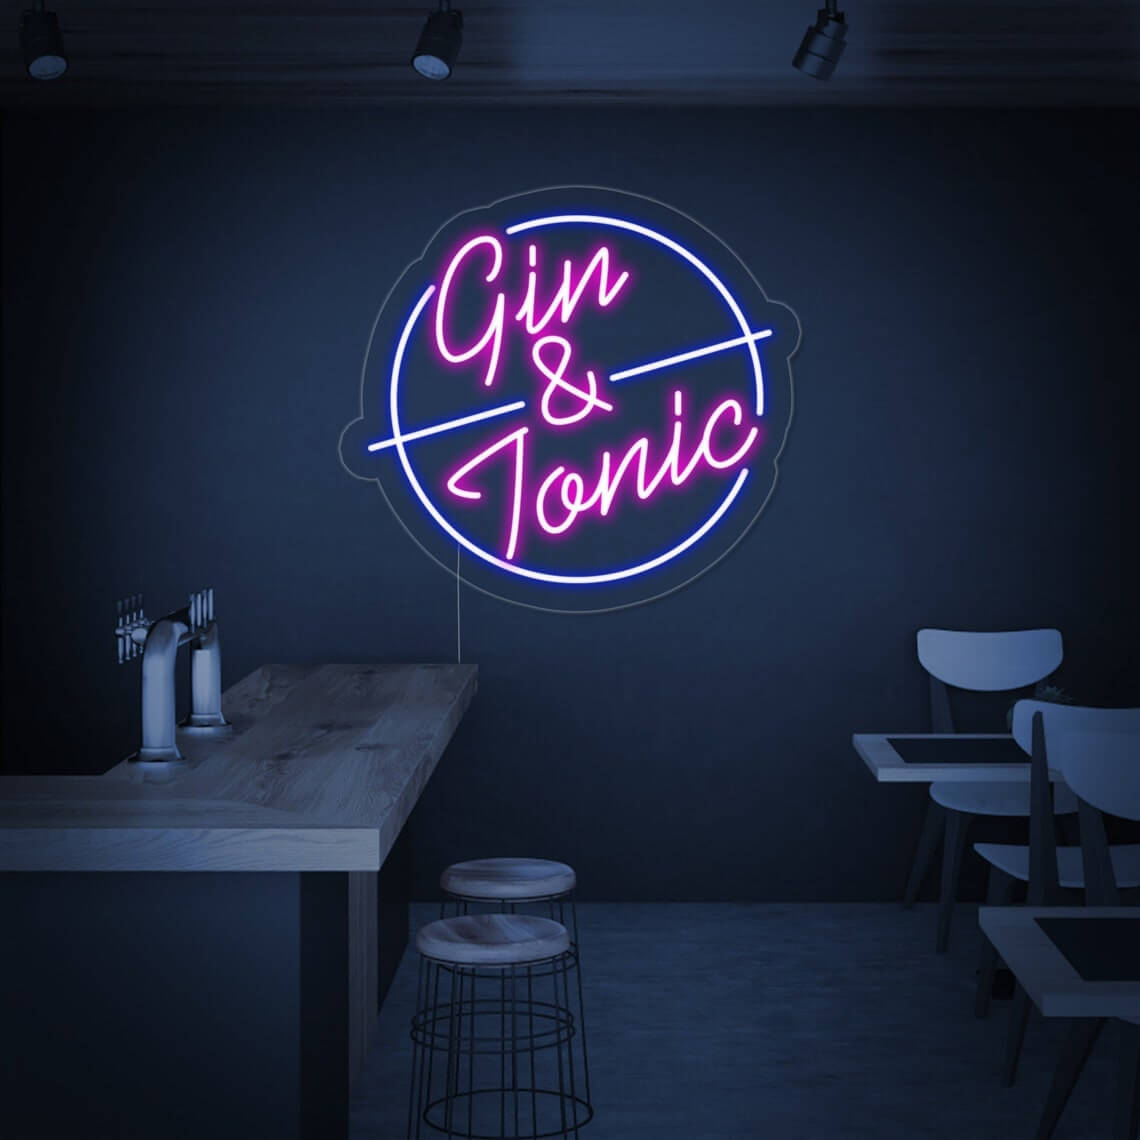 "GIN & TONIC" LED Neon Schild (50x45cm)